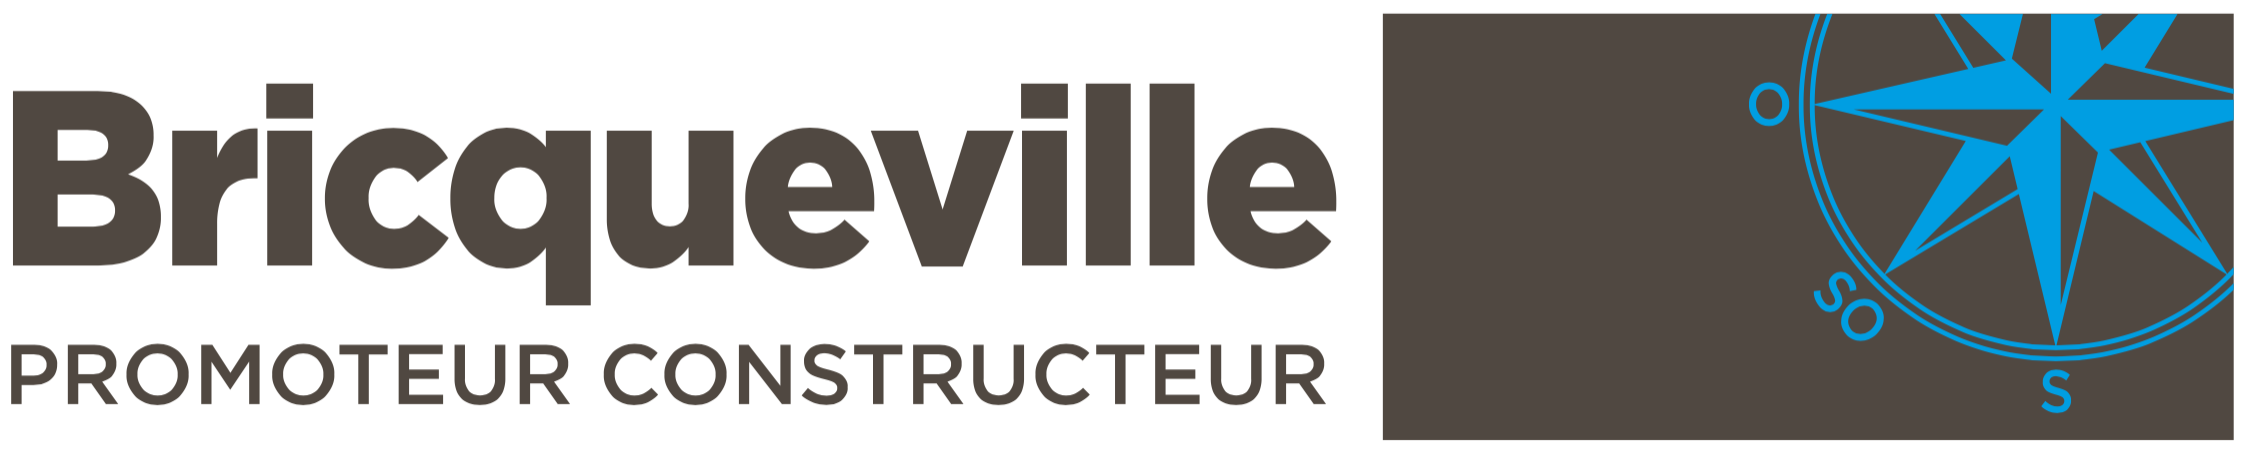 logo bricqueville